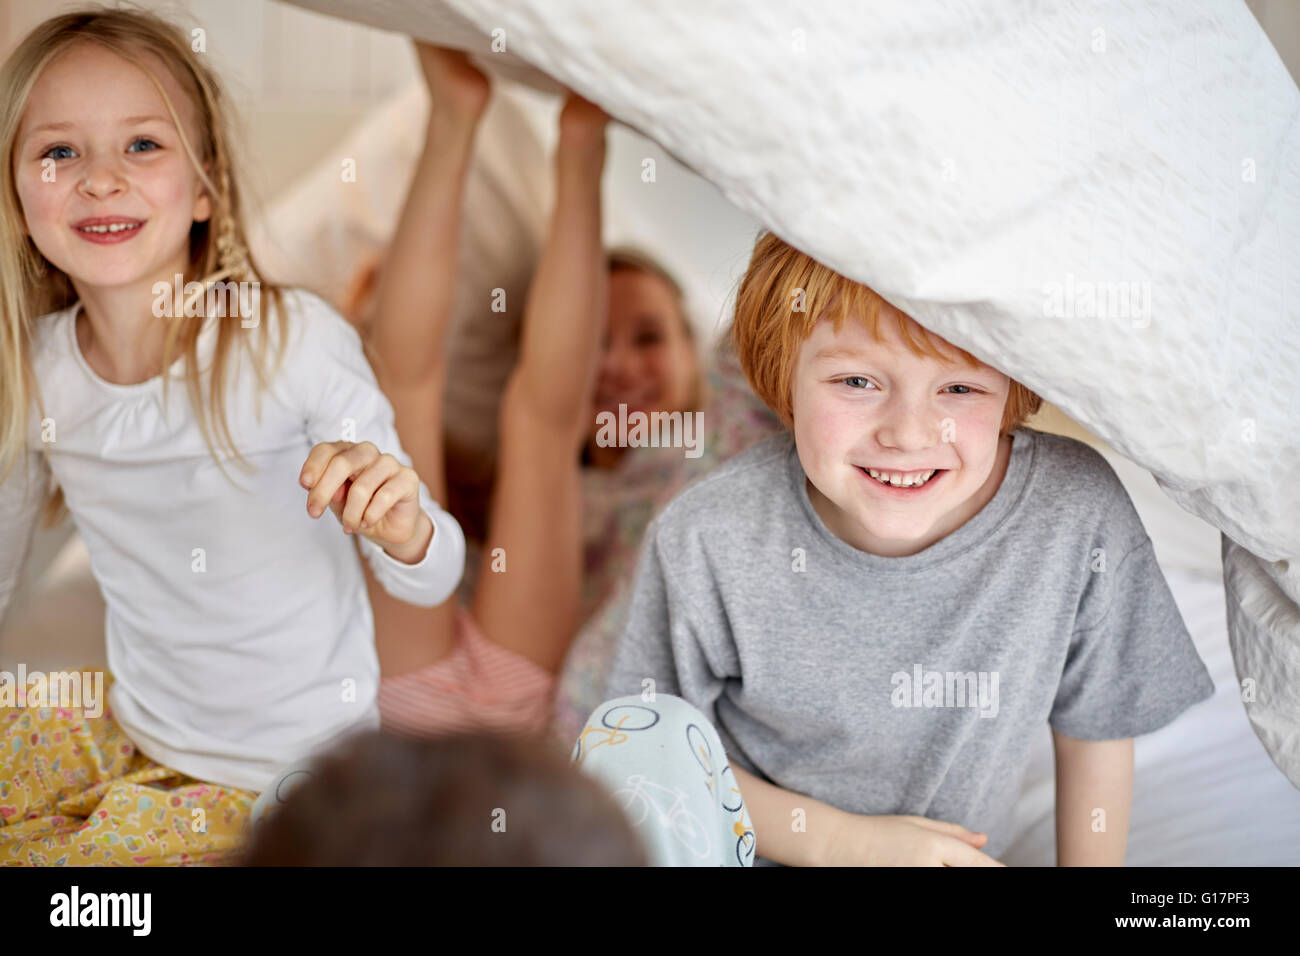 Children having fun playing in bed Stock Photo